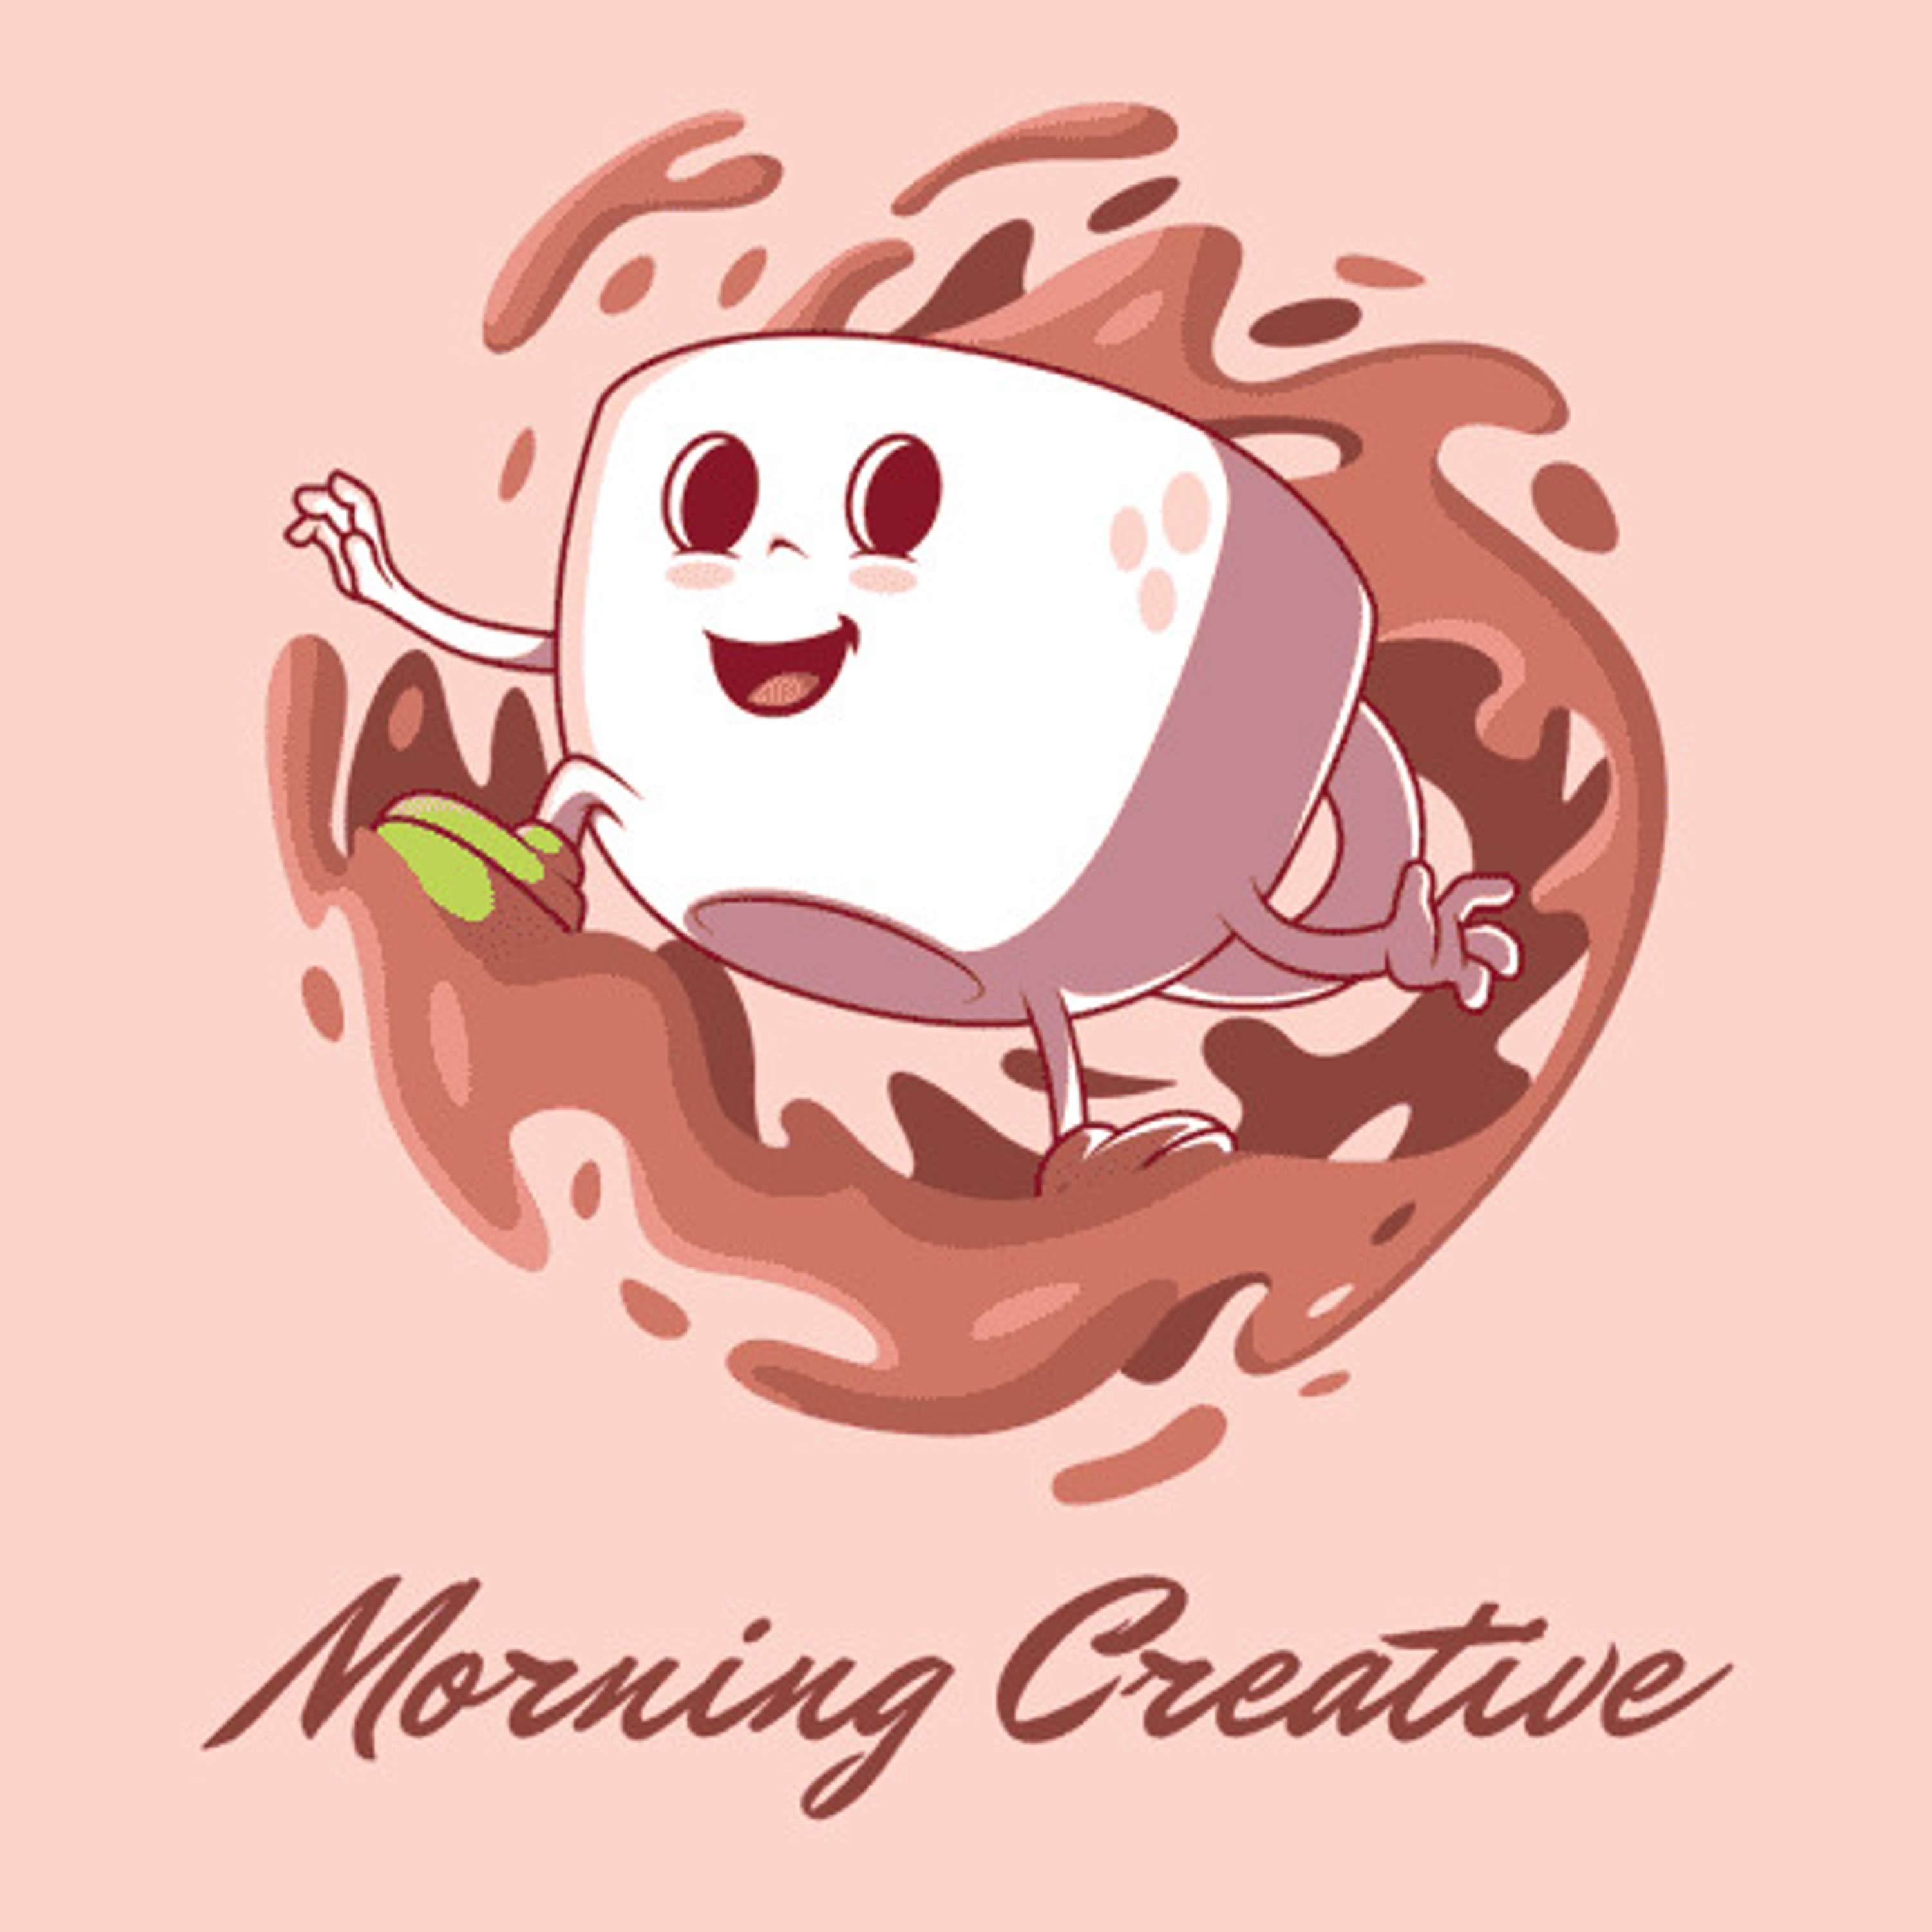 Introducing Morning Creative